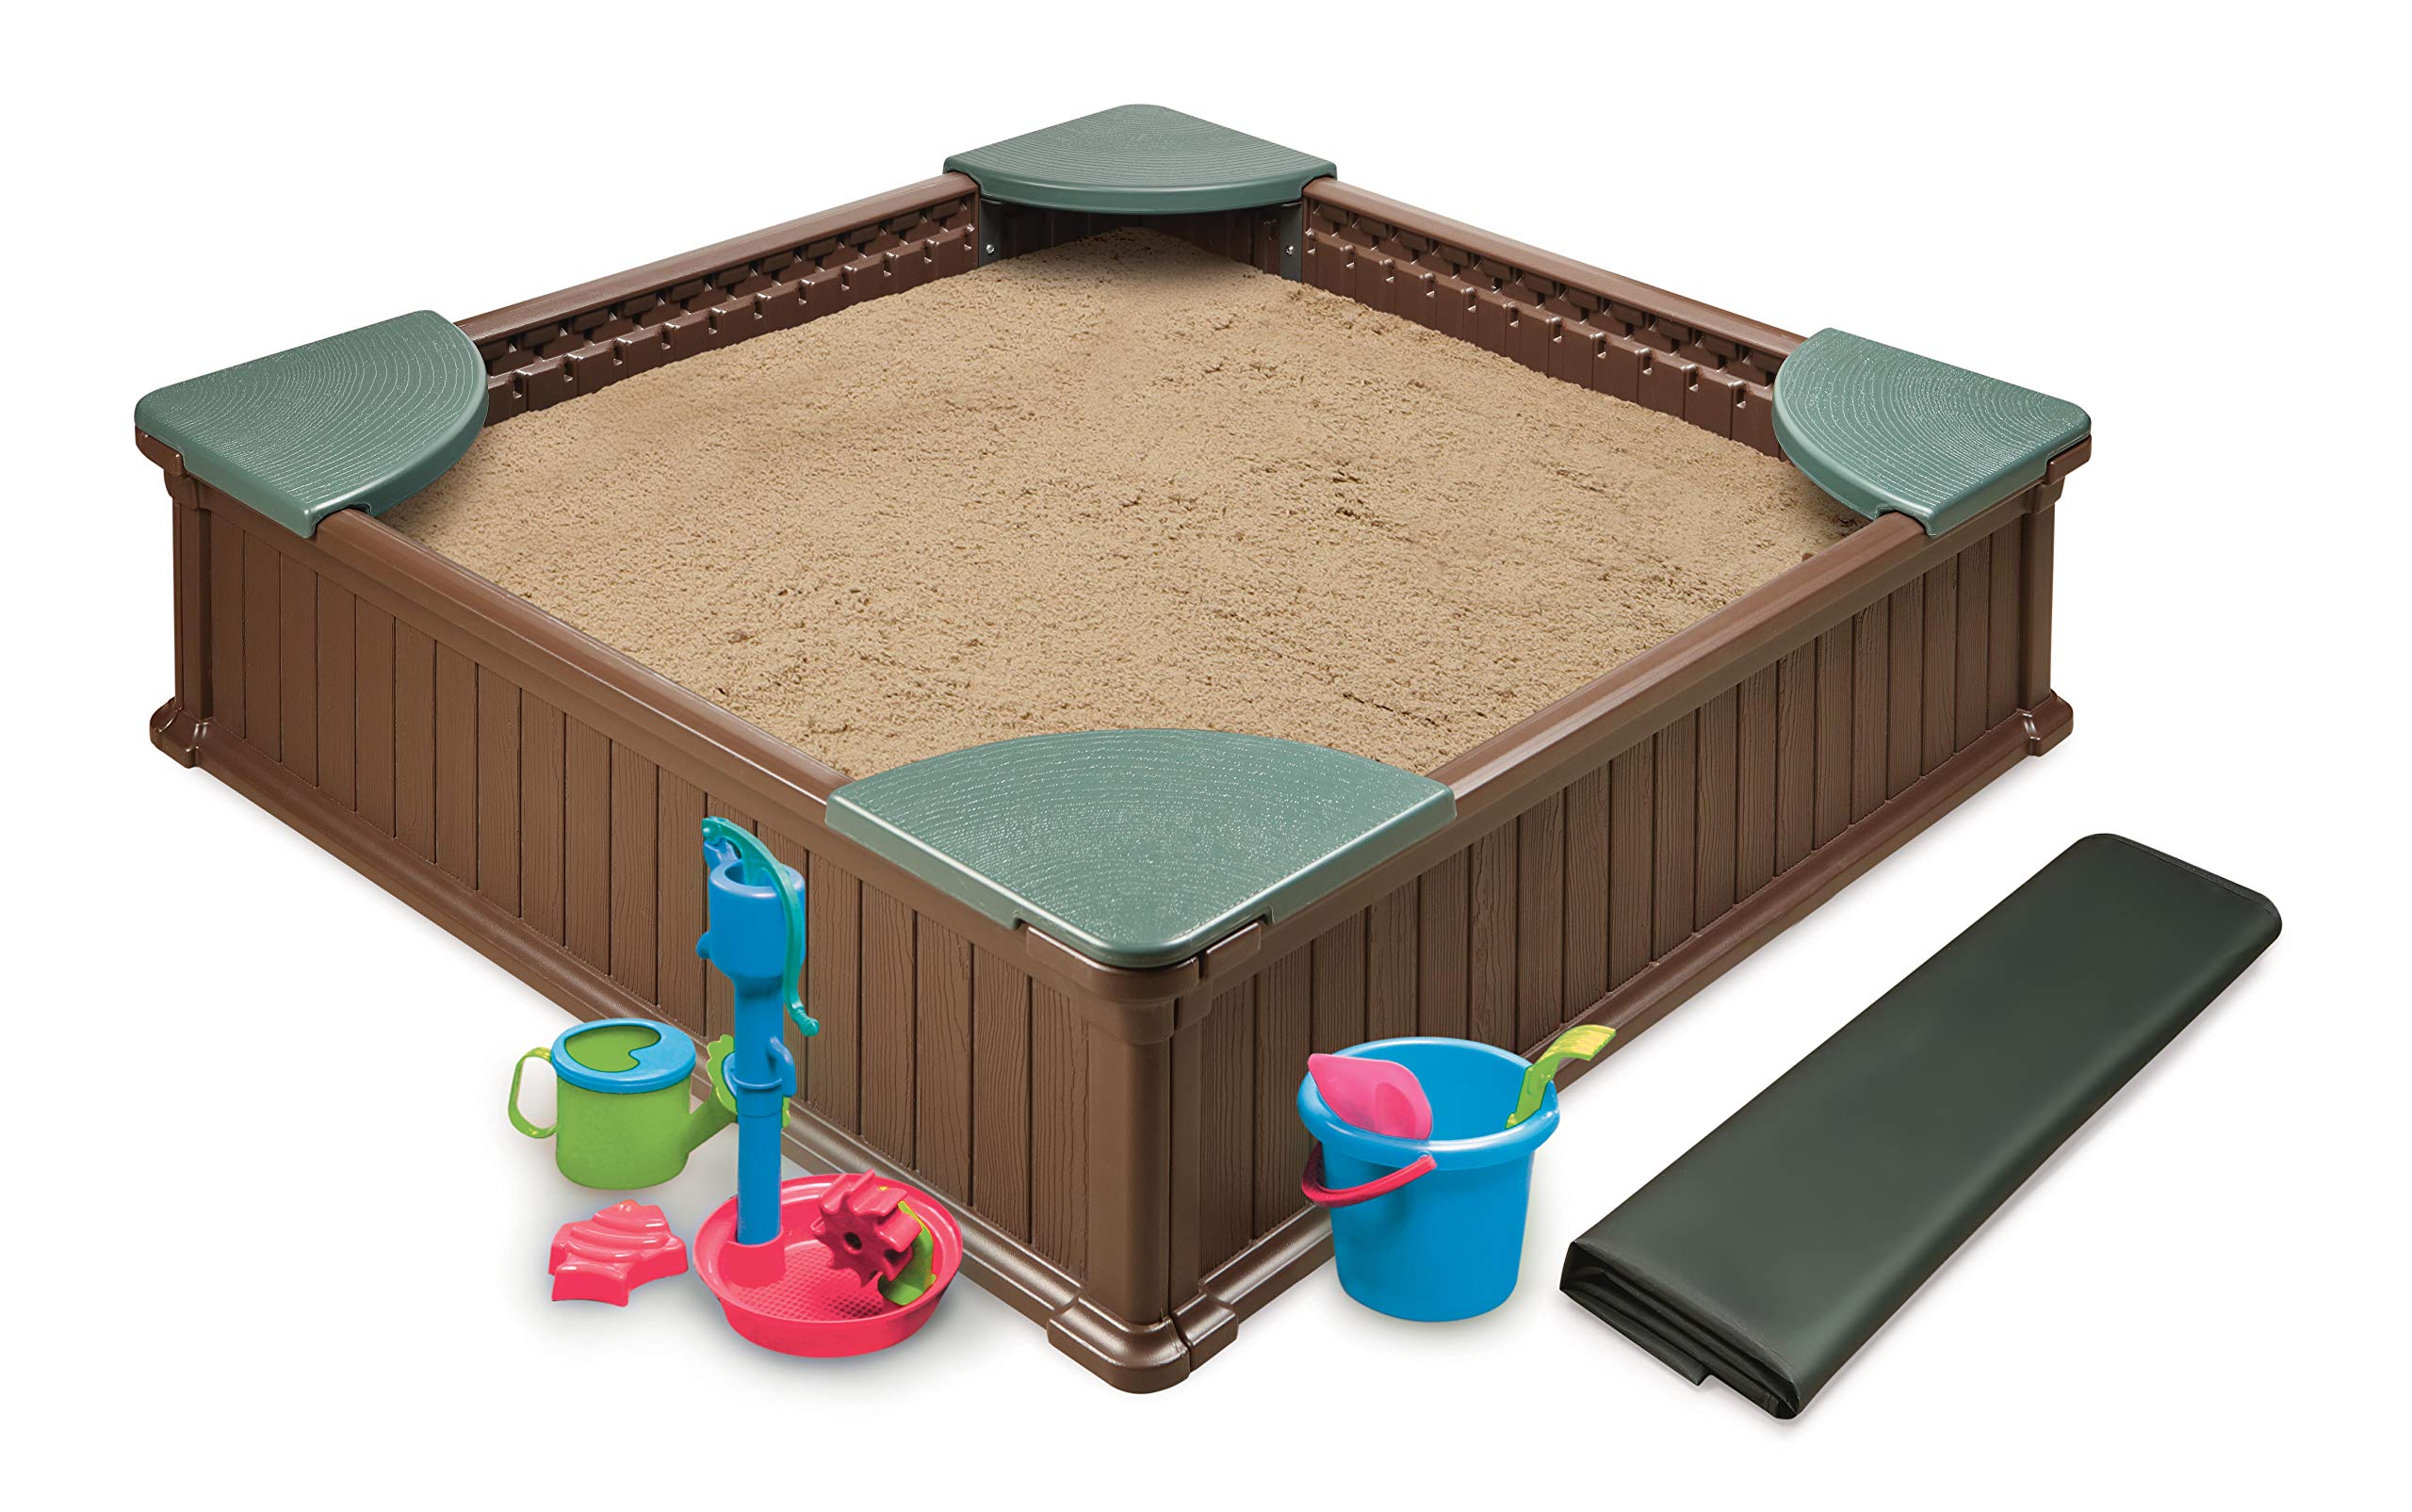 Badger Basket Woodland 2-in-1 Kids Outdoor Sandbox or Garden and Vegetable Planter, Outdoor Play Equipment - Brown/Green